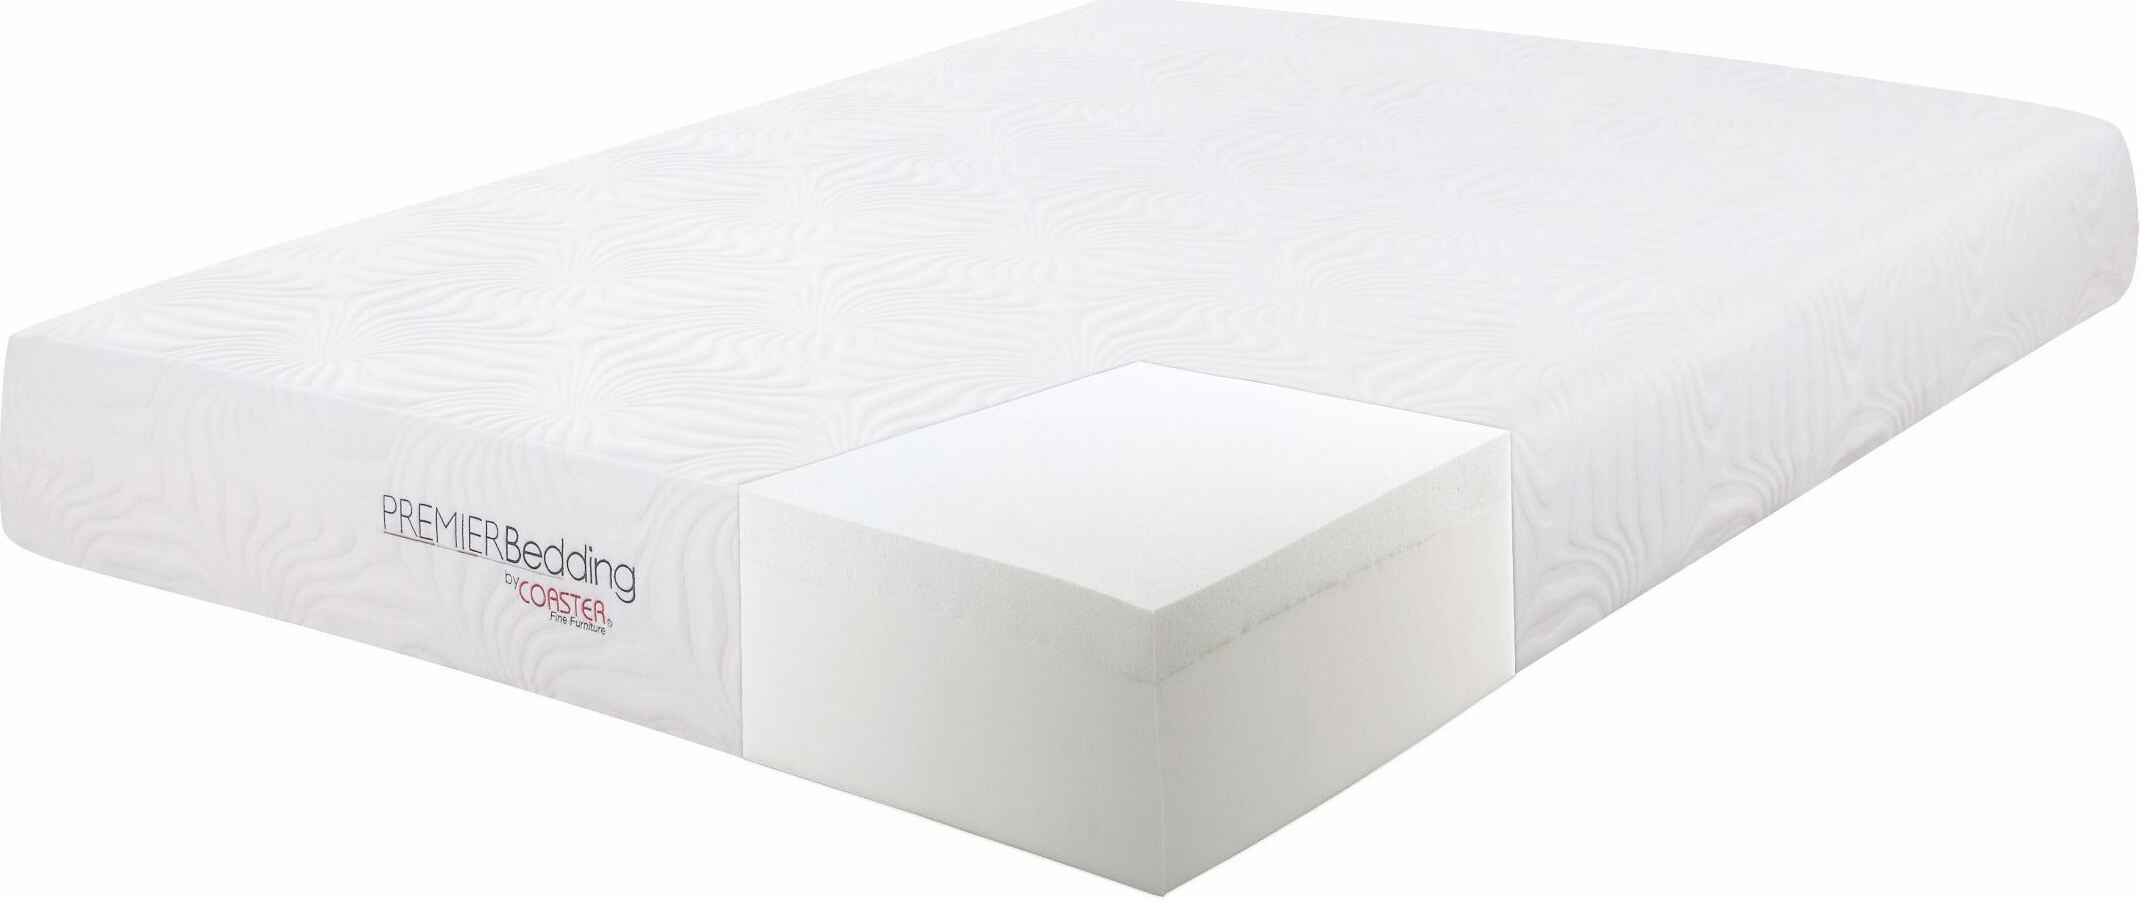 10 twin xl memory foam mattress